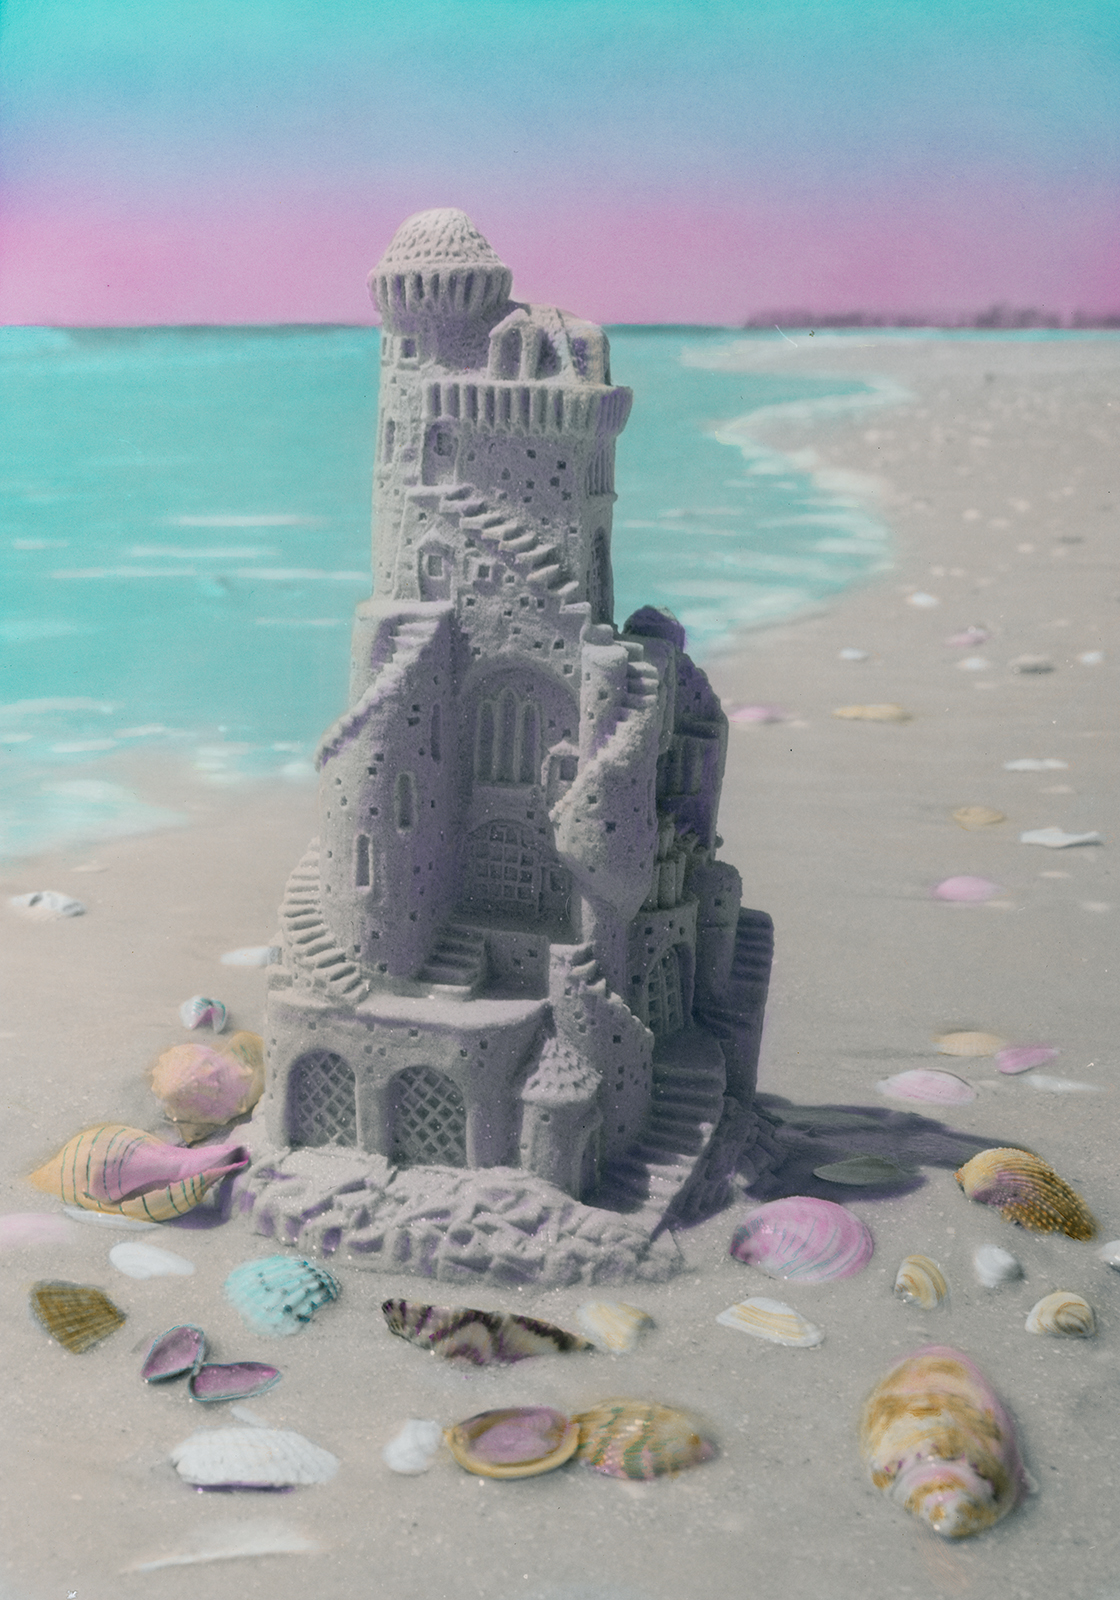 Building-castles-in-the-sand-web.jpg